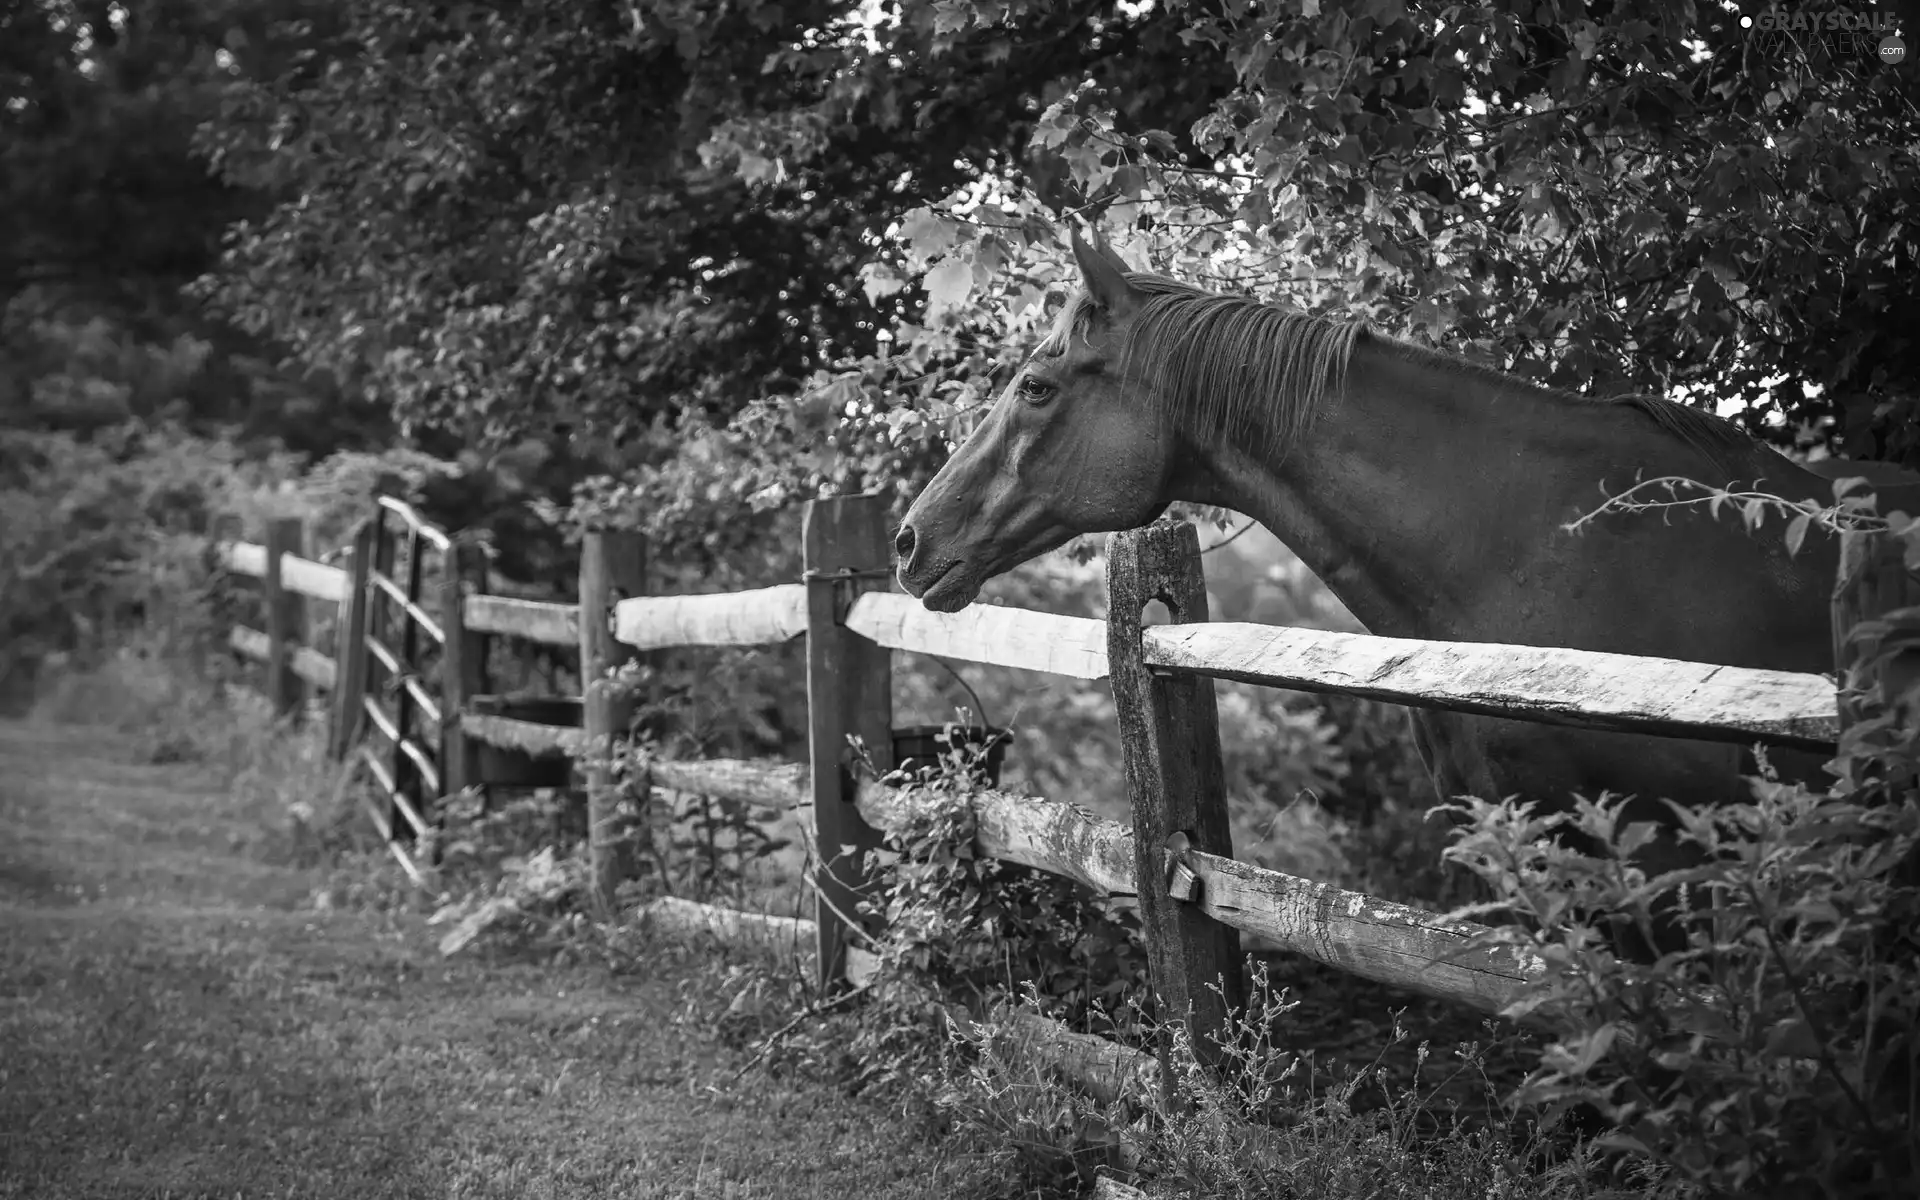 Horse, fence